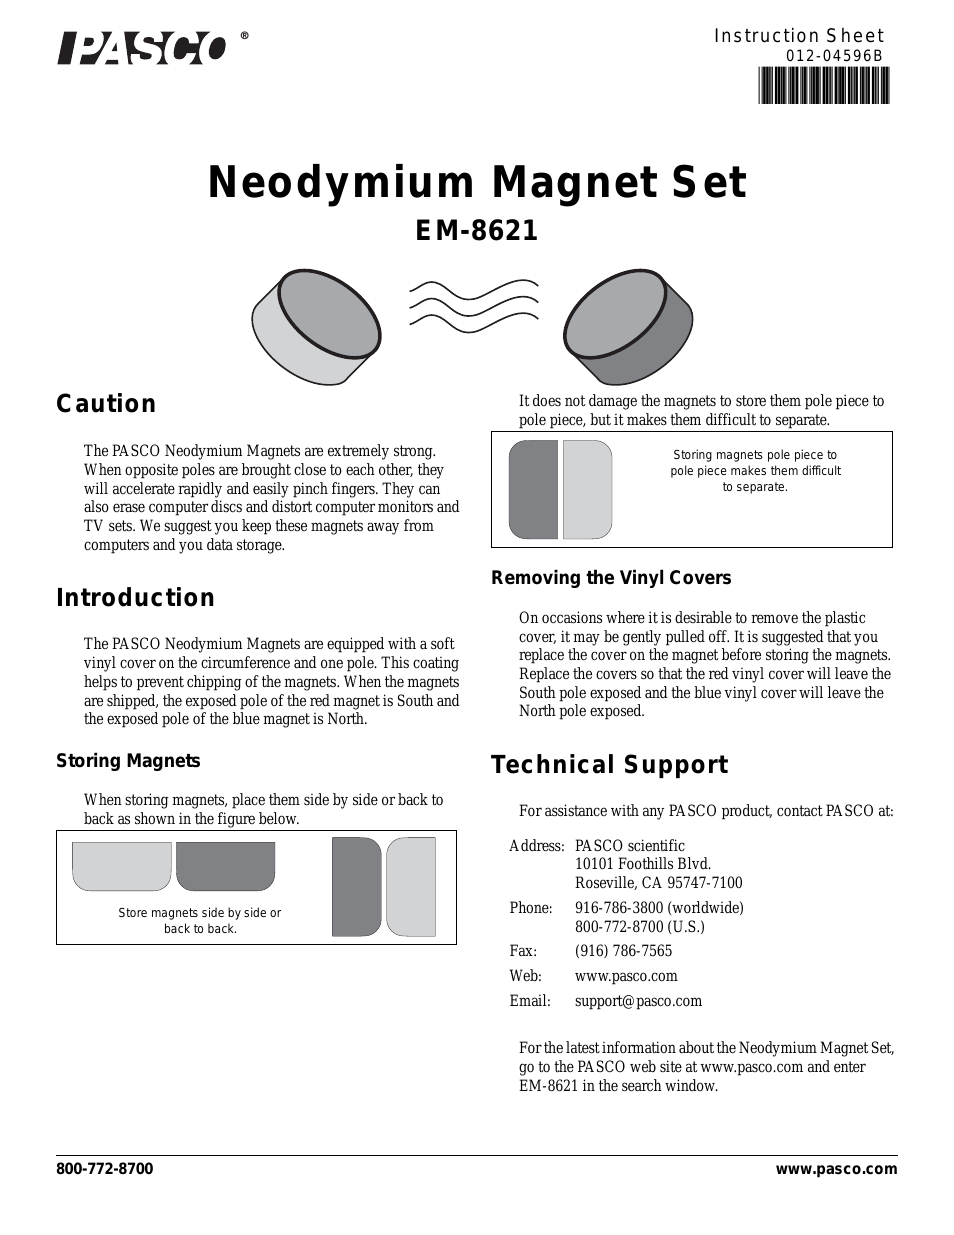 EM-8621 Neodymium Magnet Set